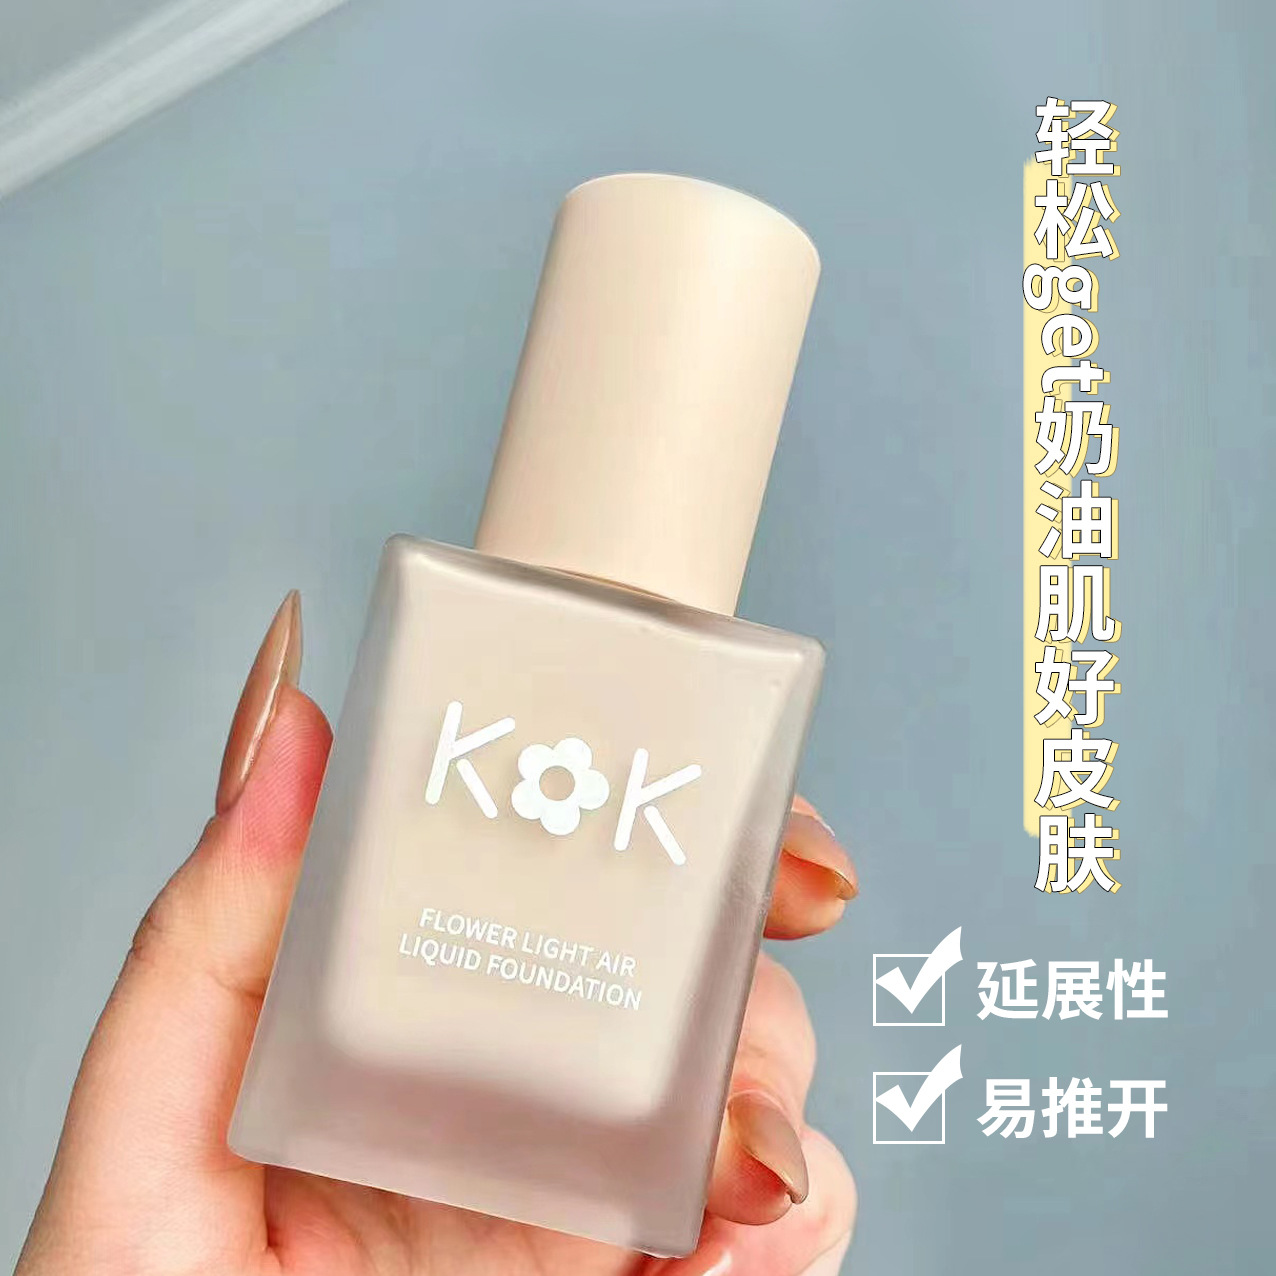 Kok Flower Air Liquid Foundation Oil Milk Skin Light Feeling Transparent Moisturizing Waterproof and Oil Controlling Repair Face Concealer Makeup Primer Moisturizing